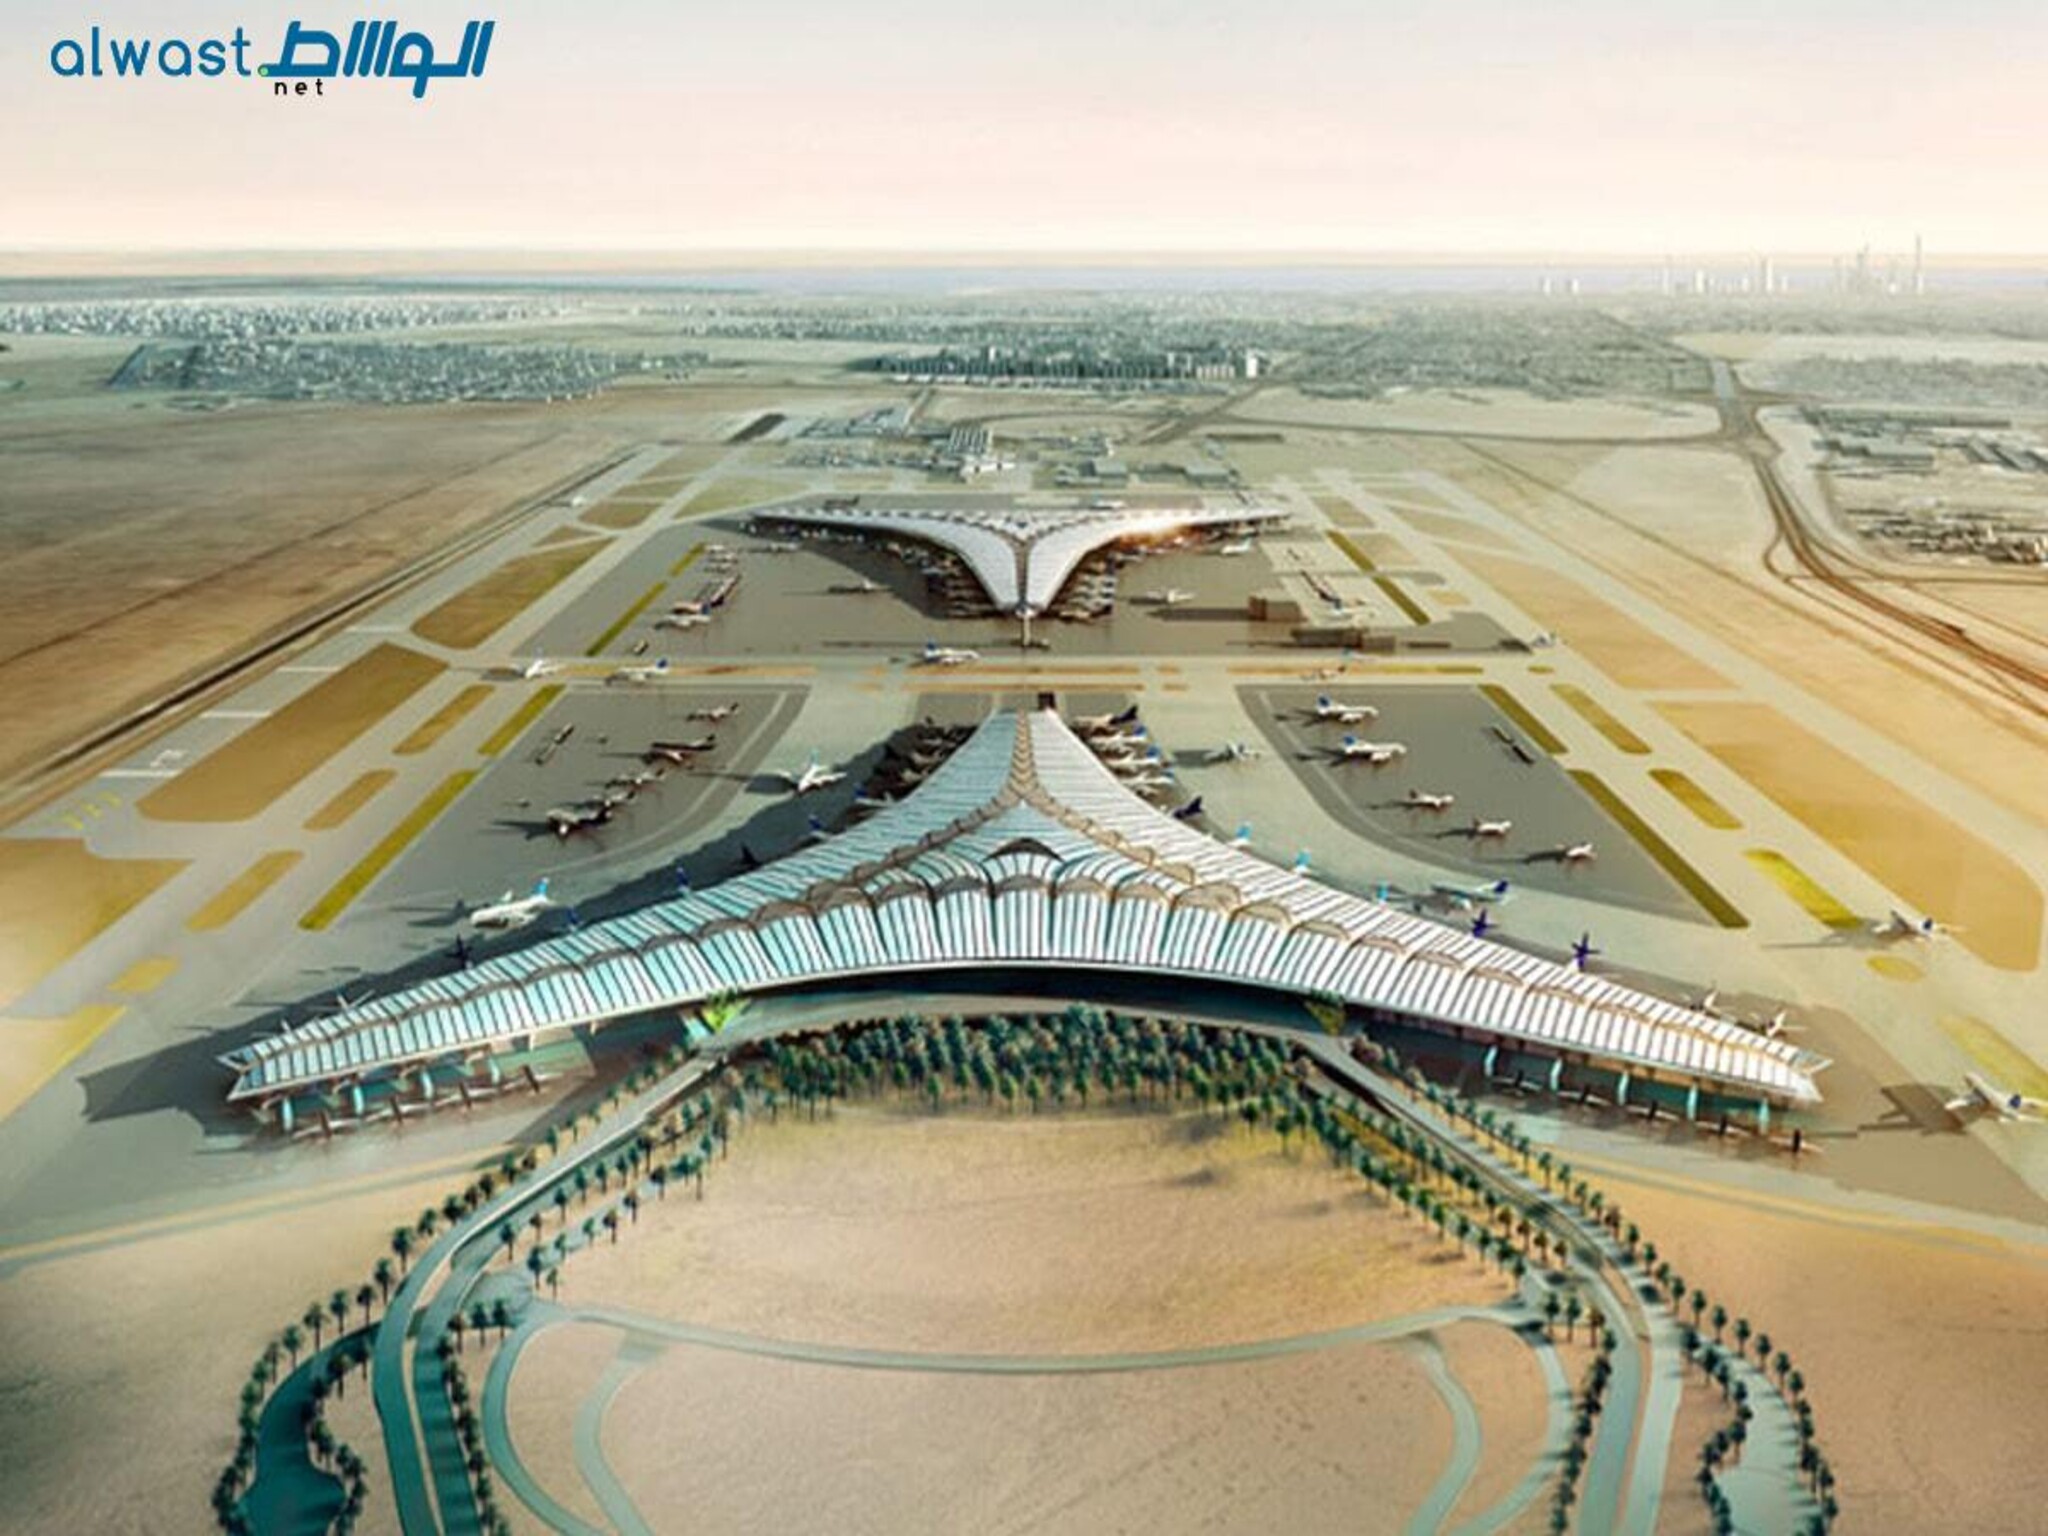  Kuwait airport passenger numbers fall 8% despite increase in flights 